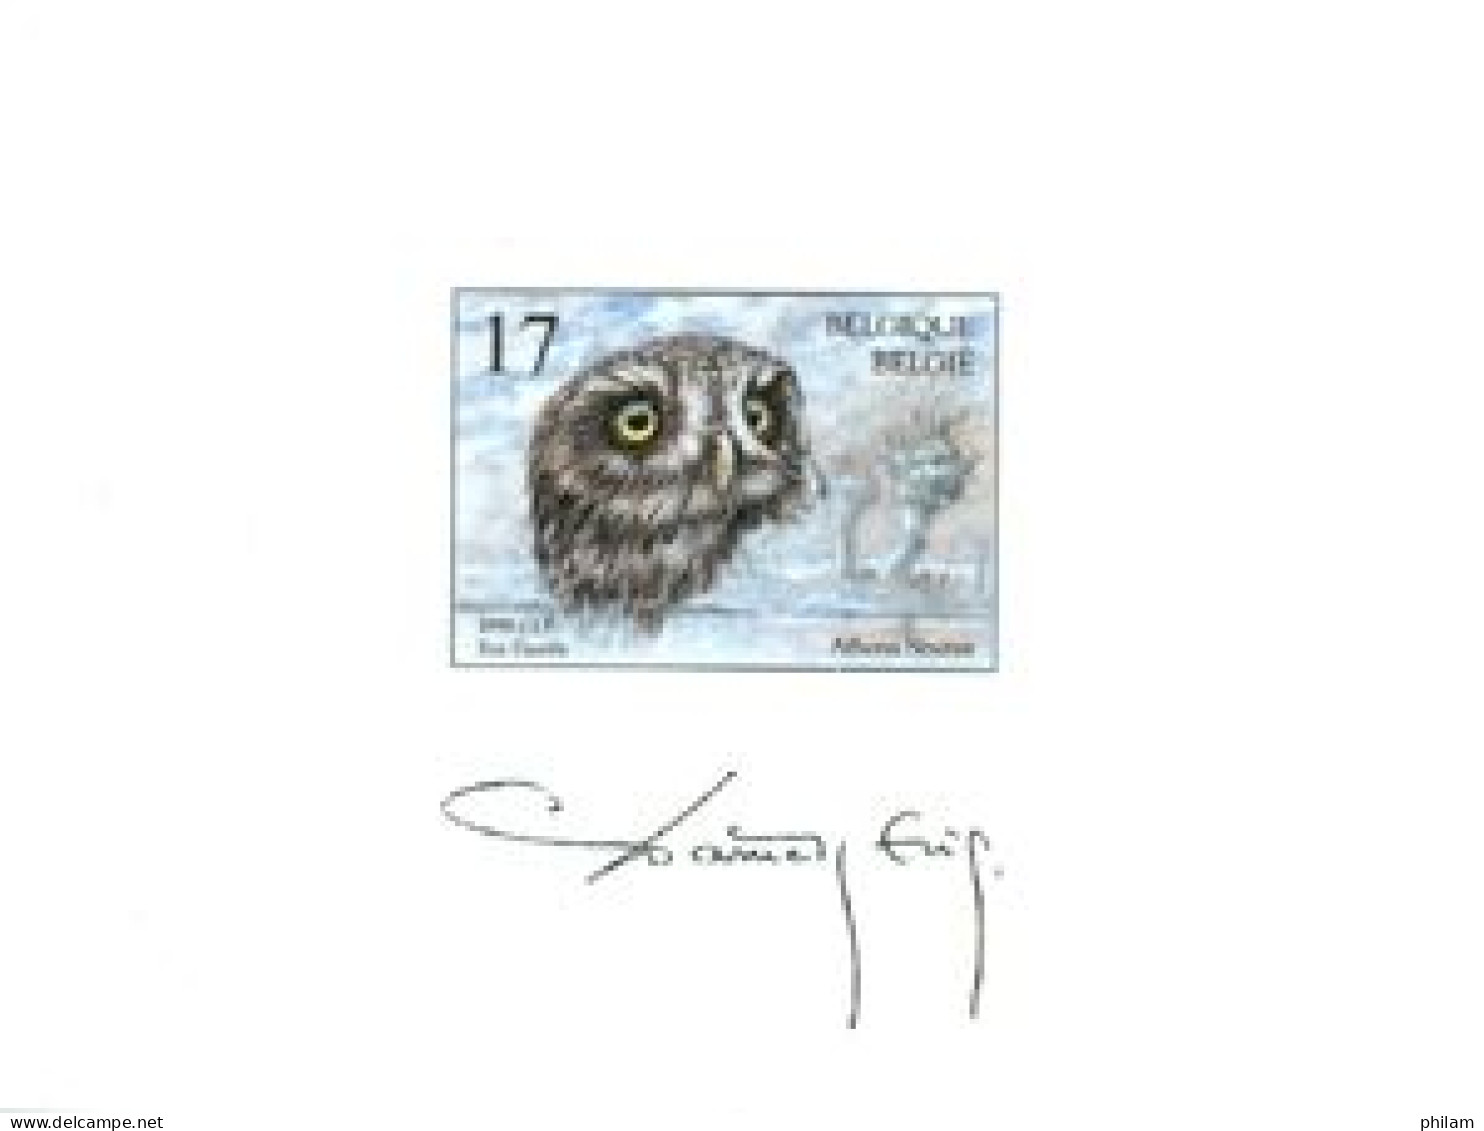 BELGIQUE 1999 - NA 6 - FR - Hibou - Uil - Owl - Texte En Français/Franse Text - Niet-aangenomen Ontwerpen [NA]